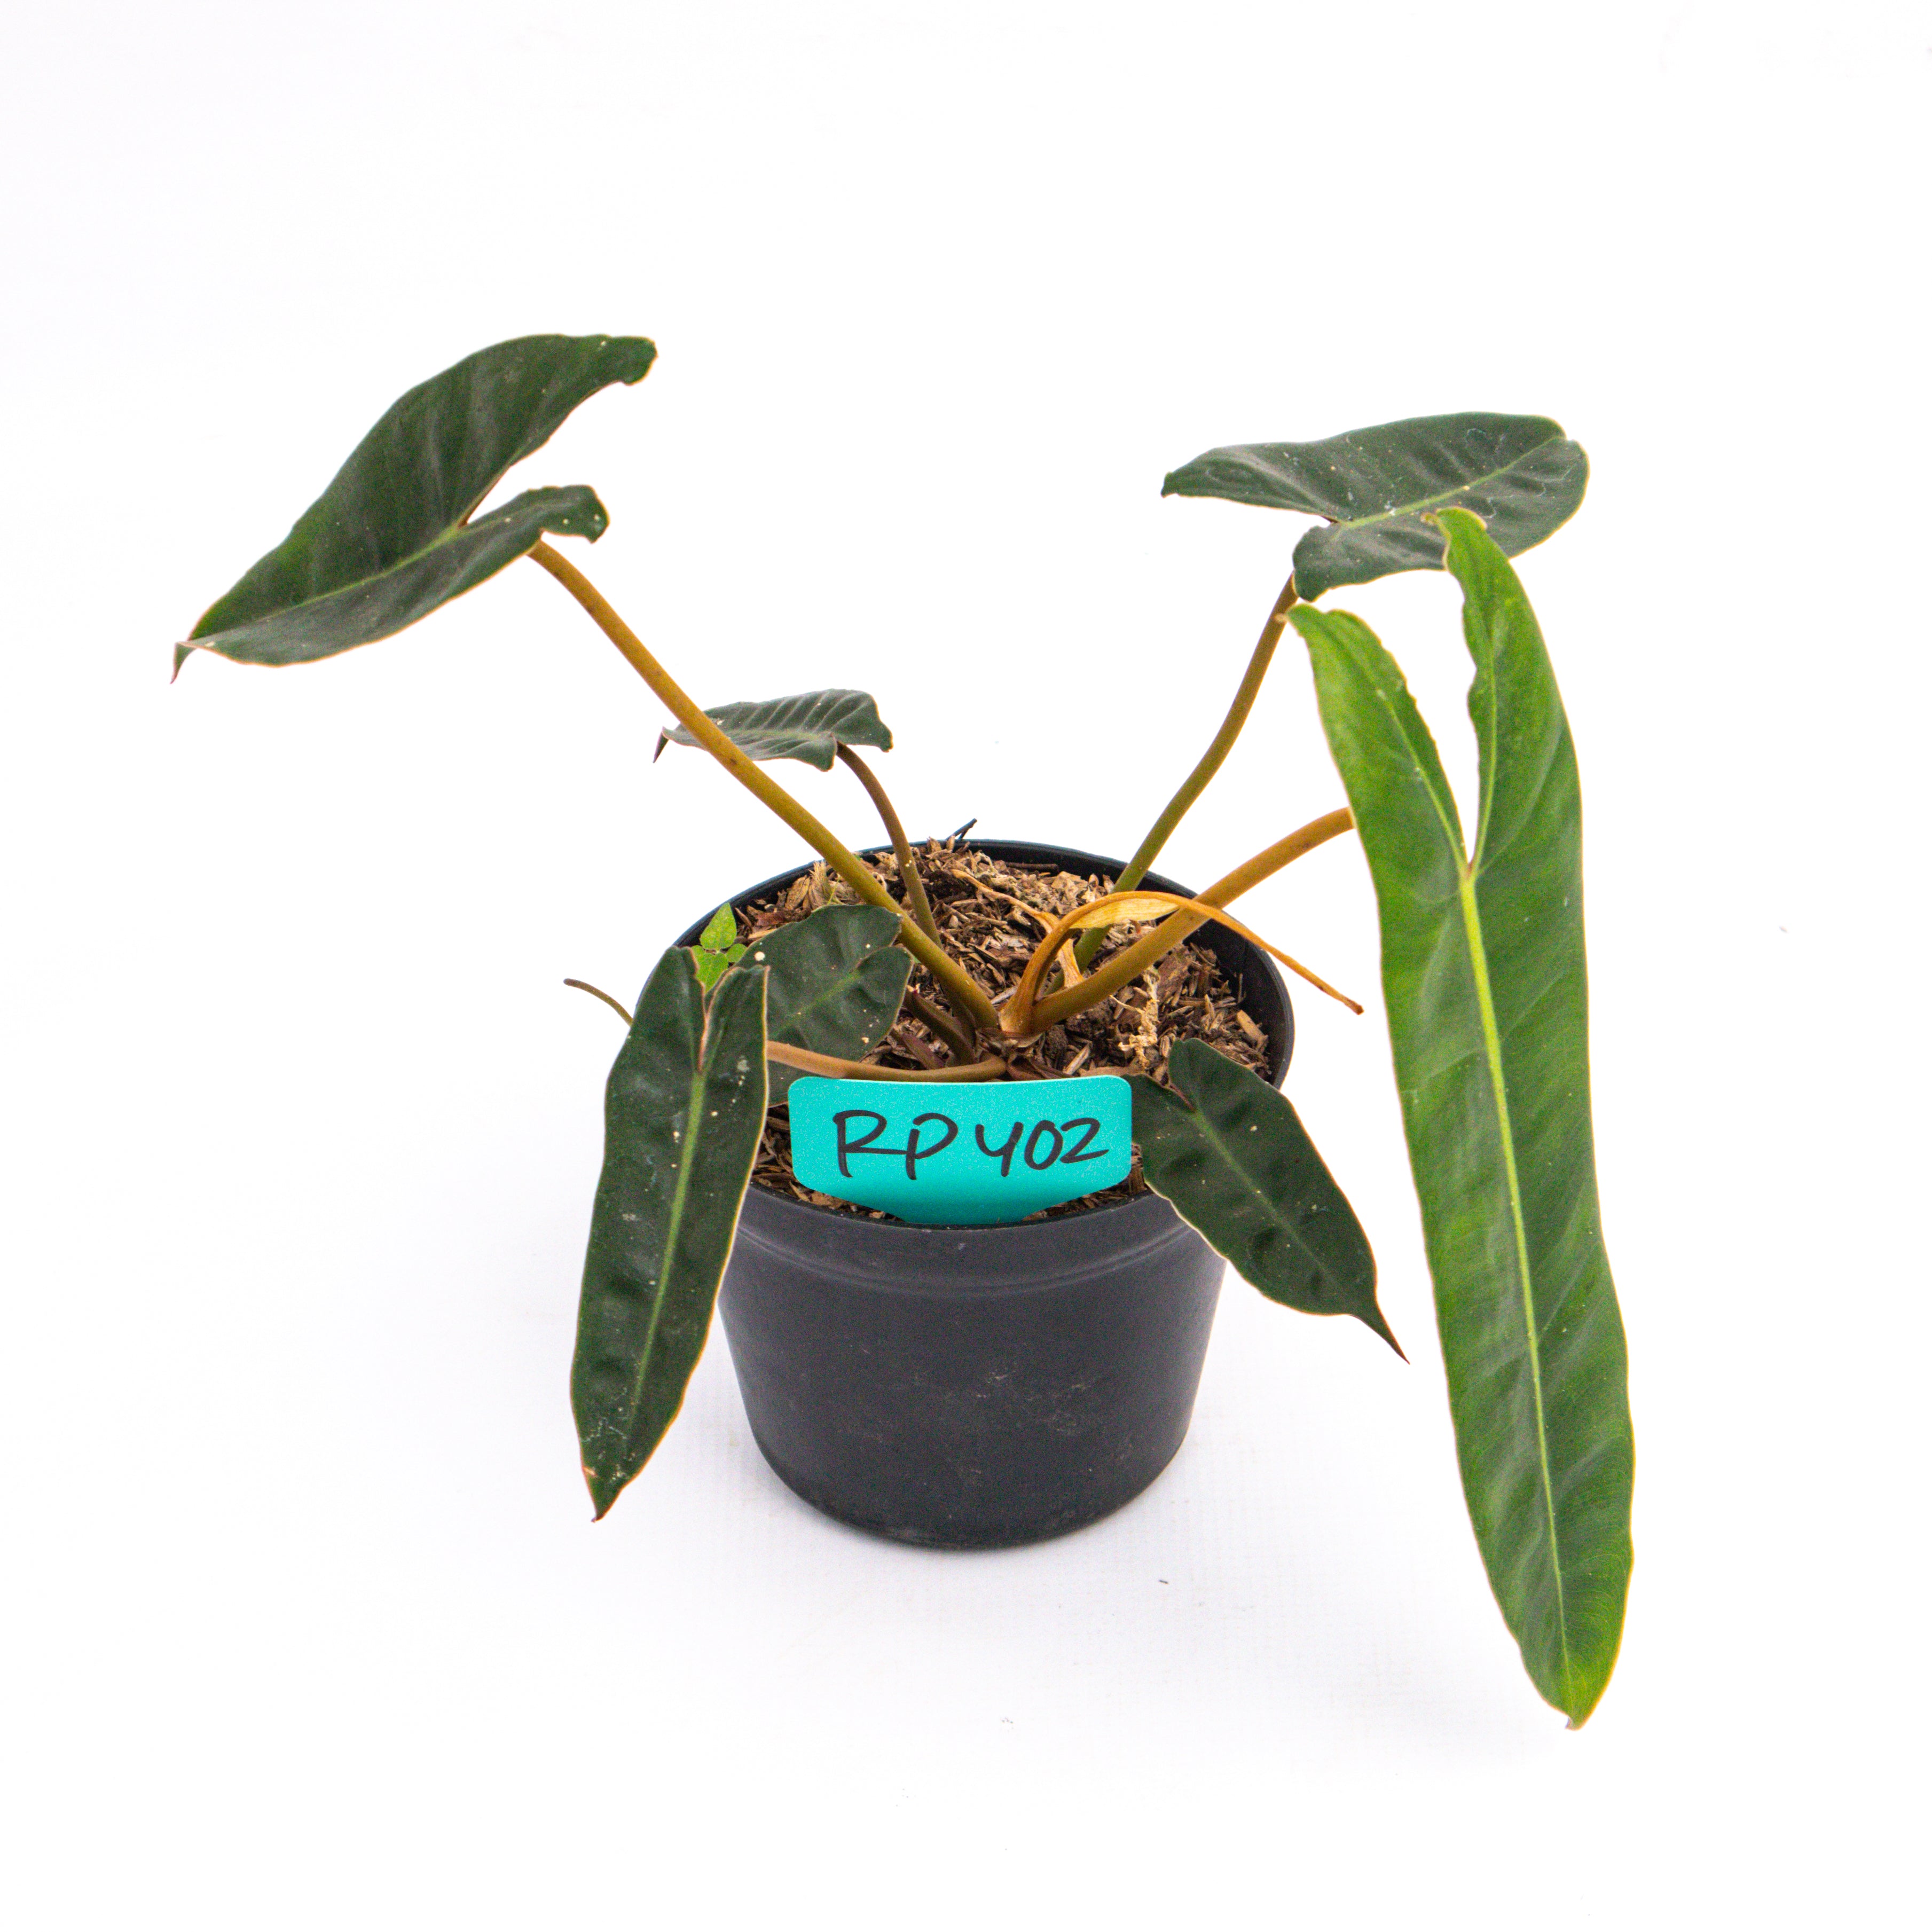 RP402 Philodendron Billiteae